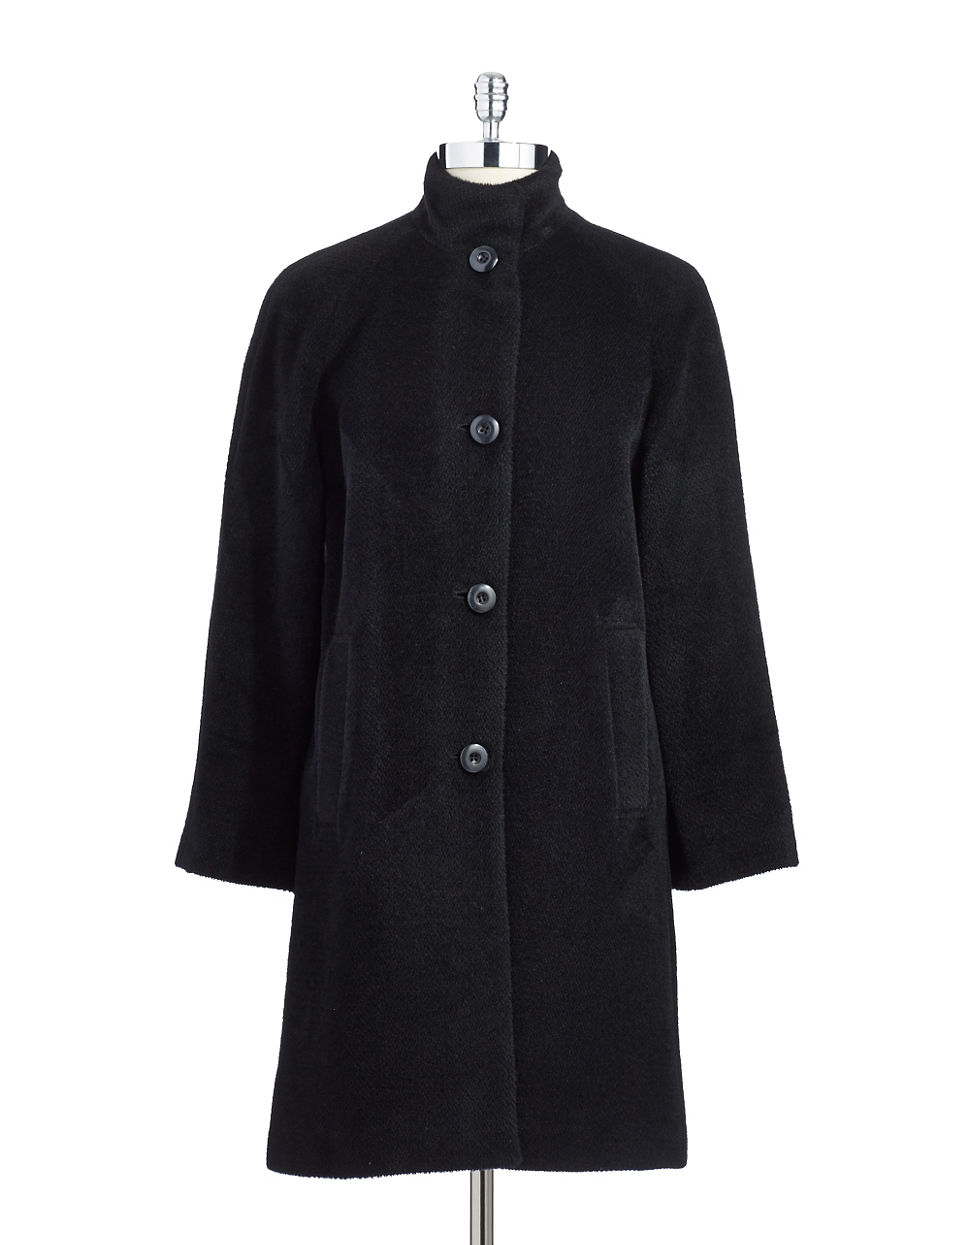 Jones New York Petite Wool Blend Car Coat in Black | Lyst